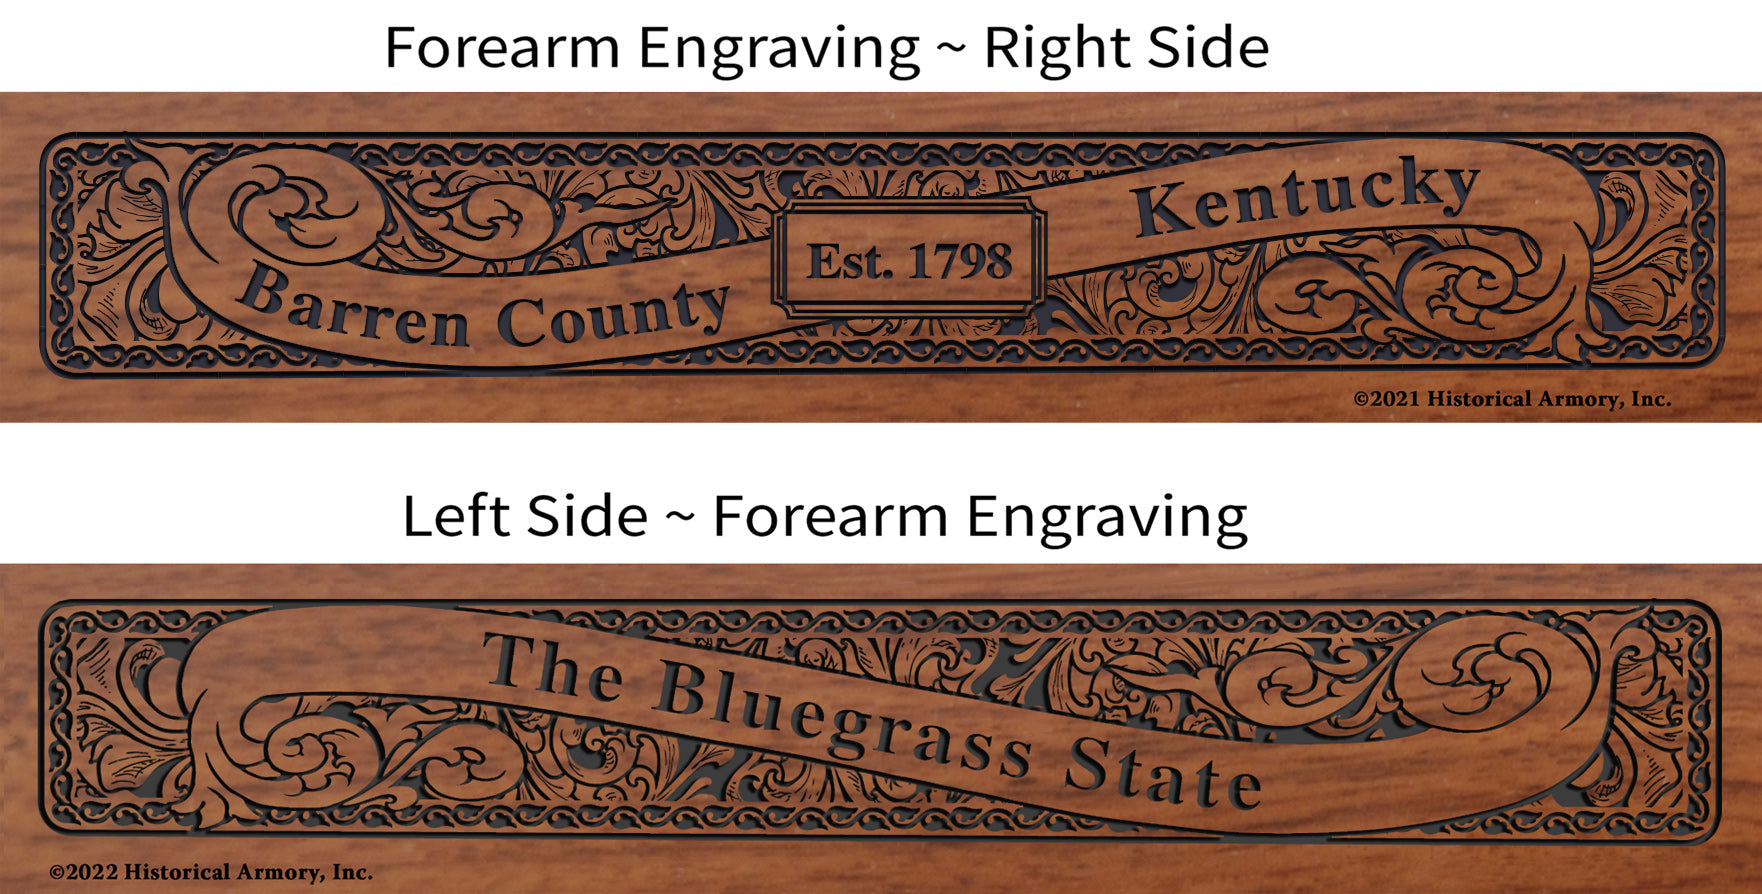 Barren County Kentucky Engraved Rifle Forearm